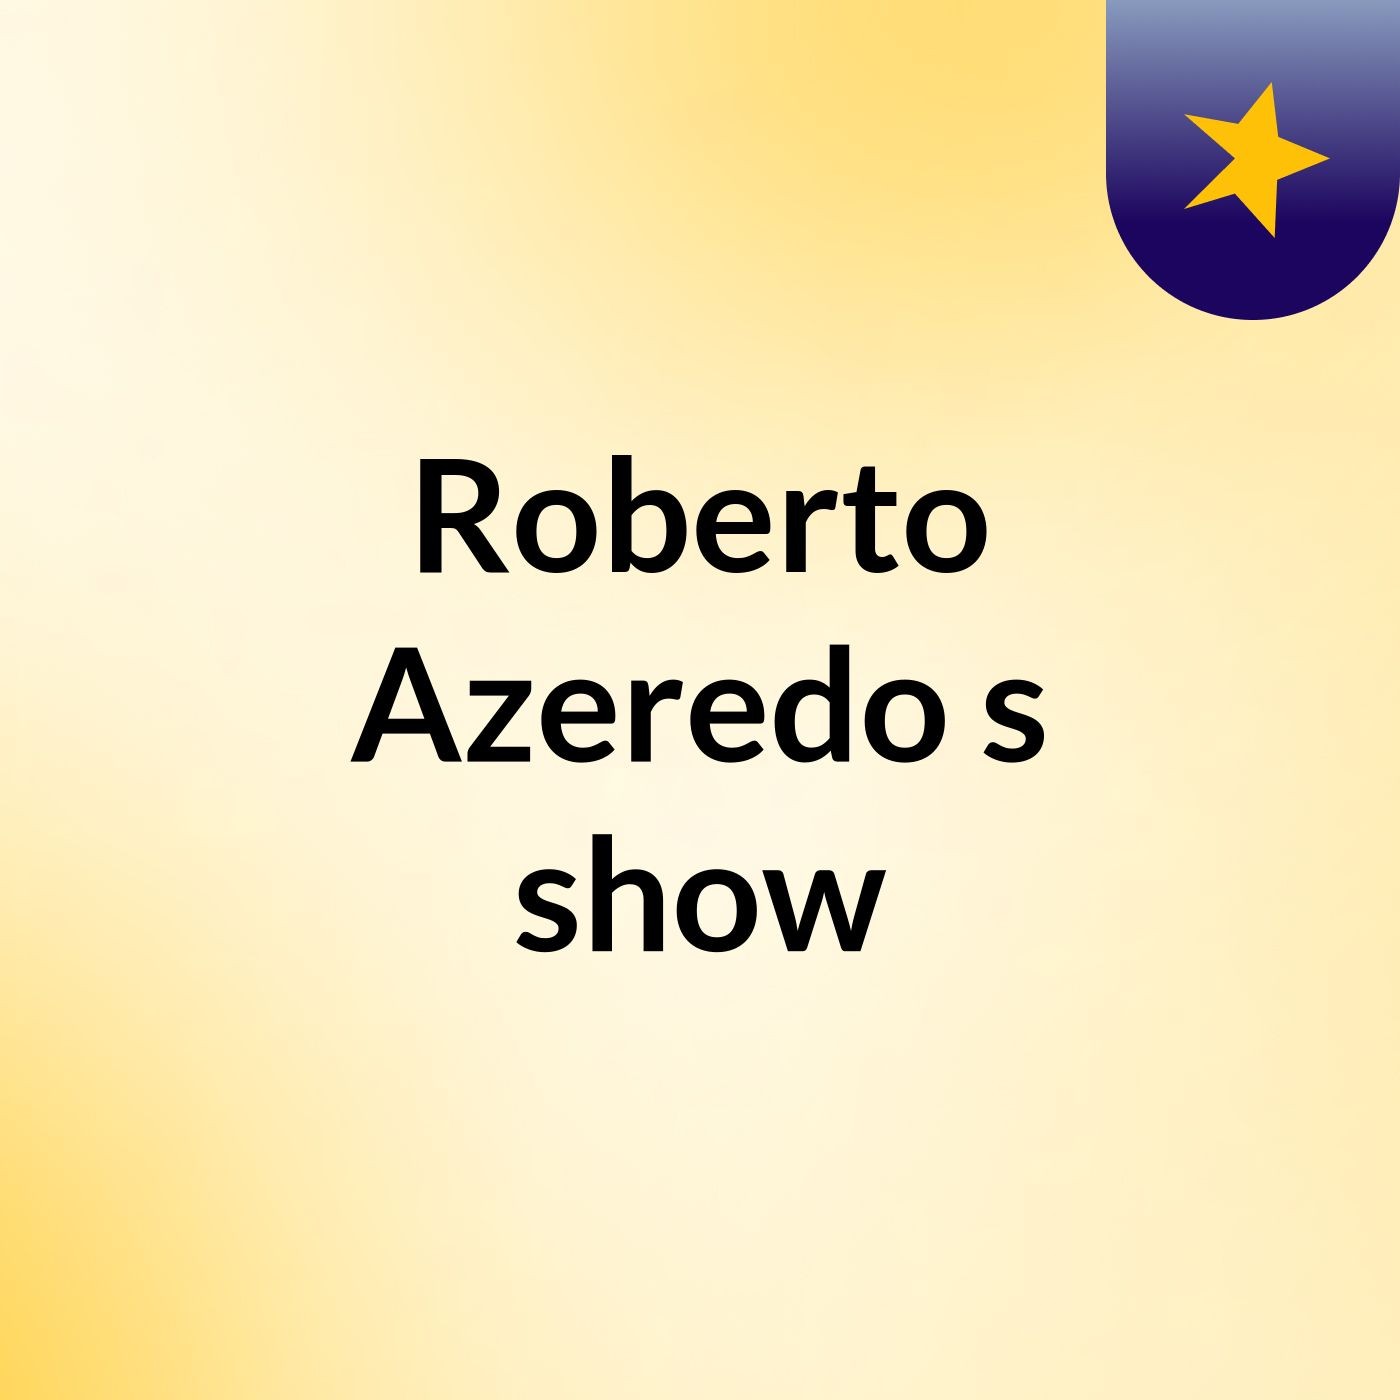 Roberto Azeredo's show